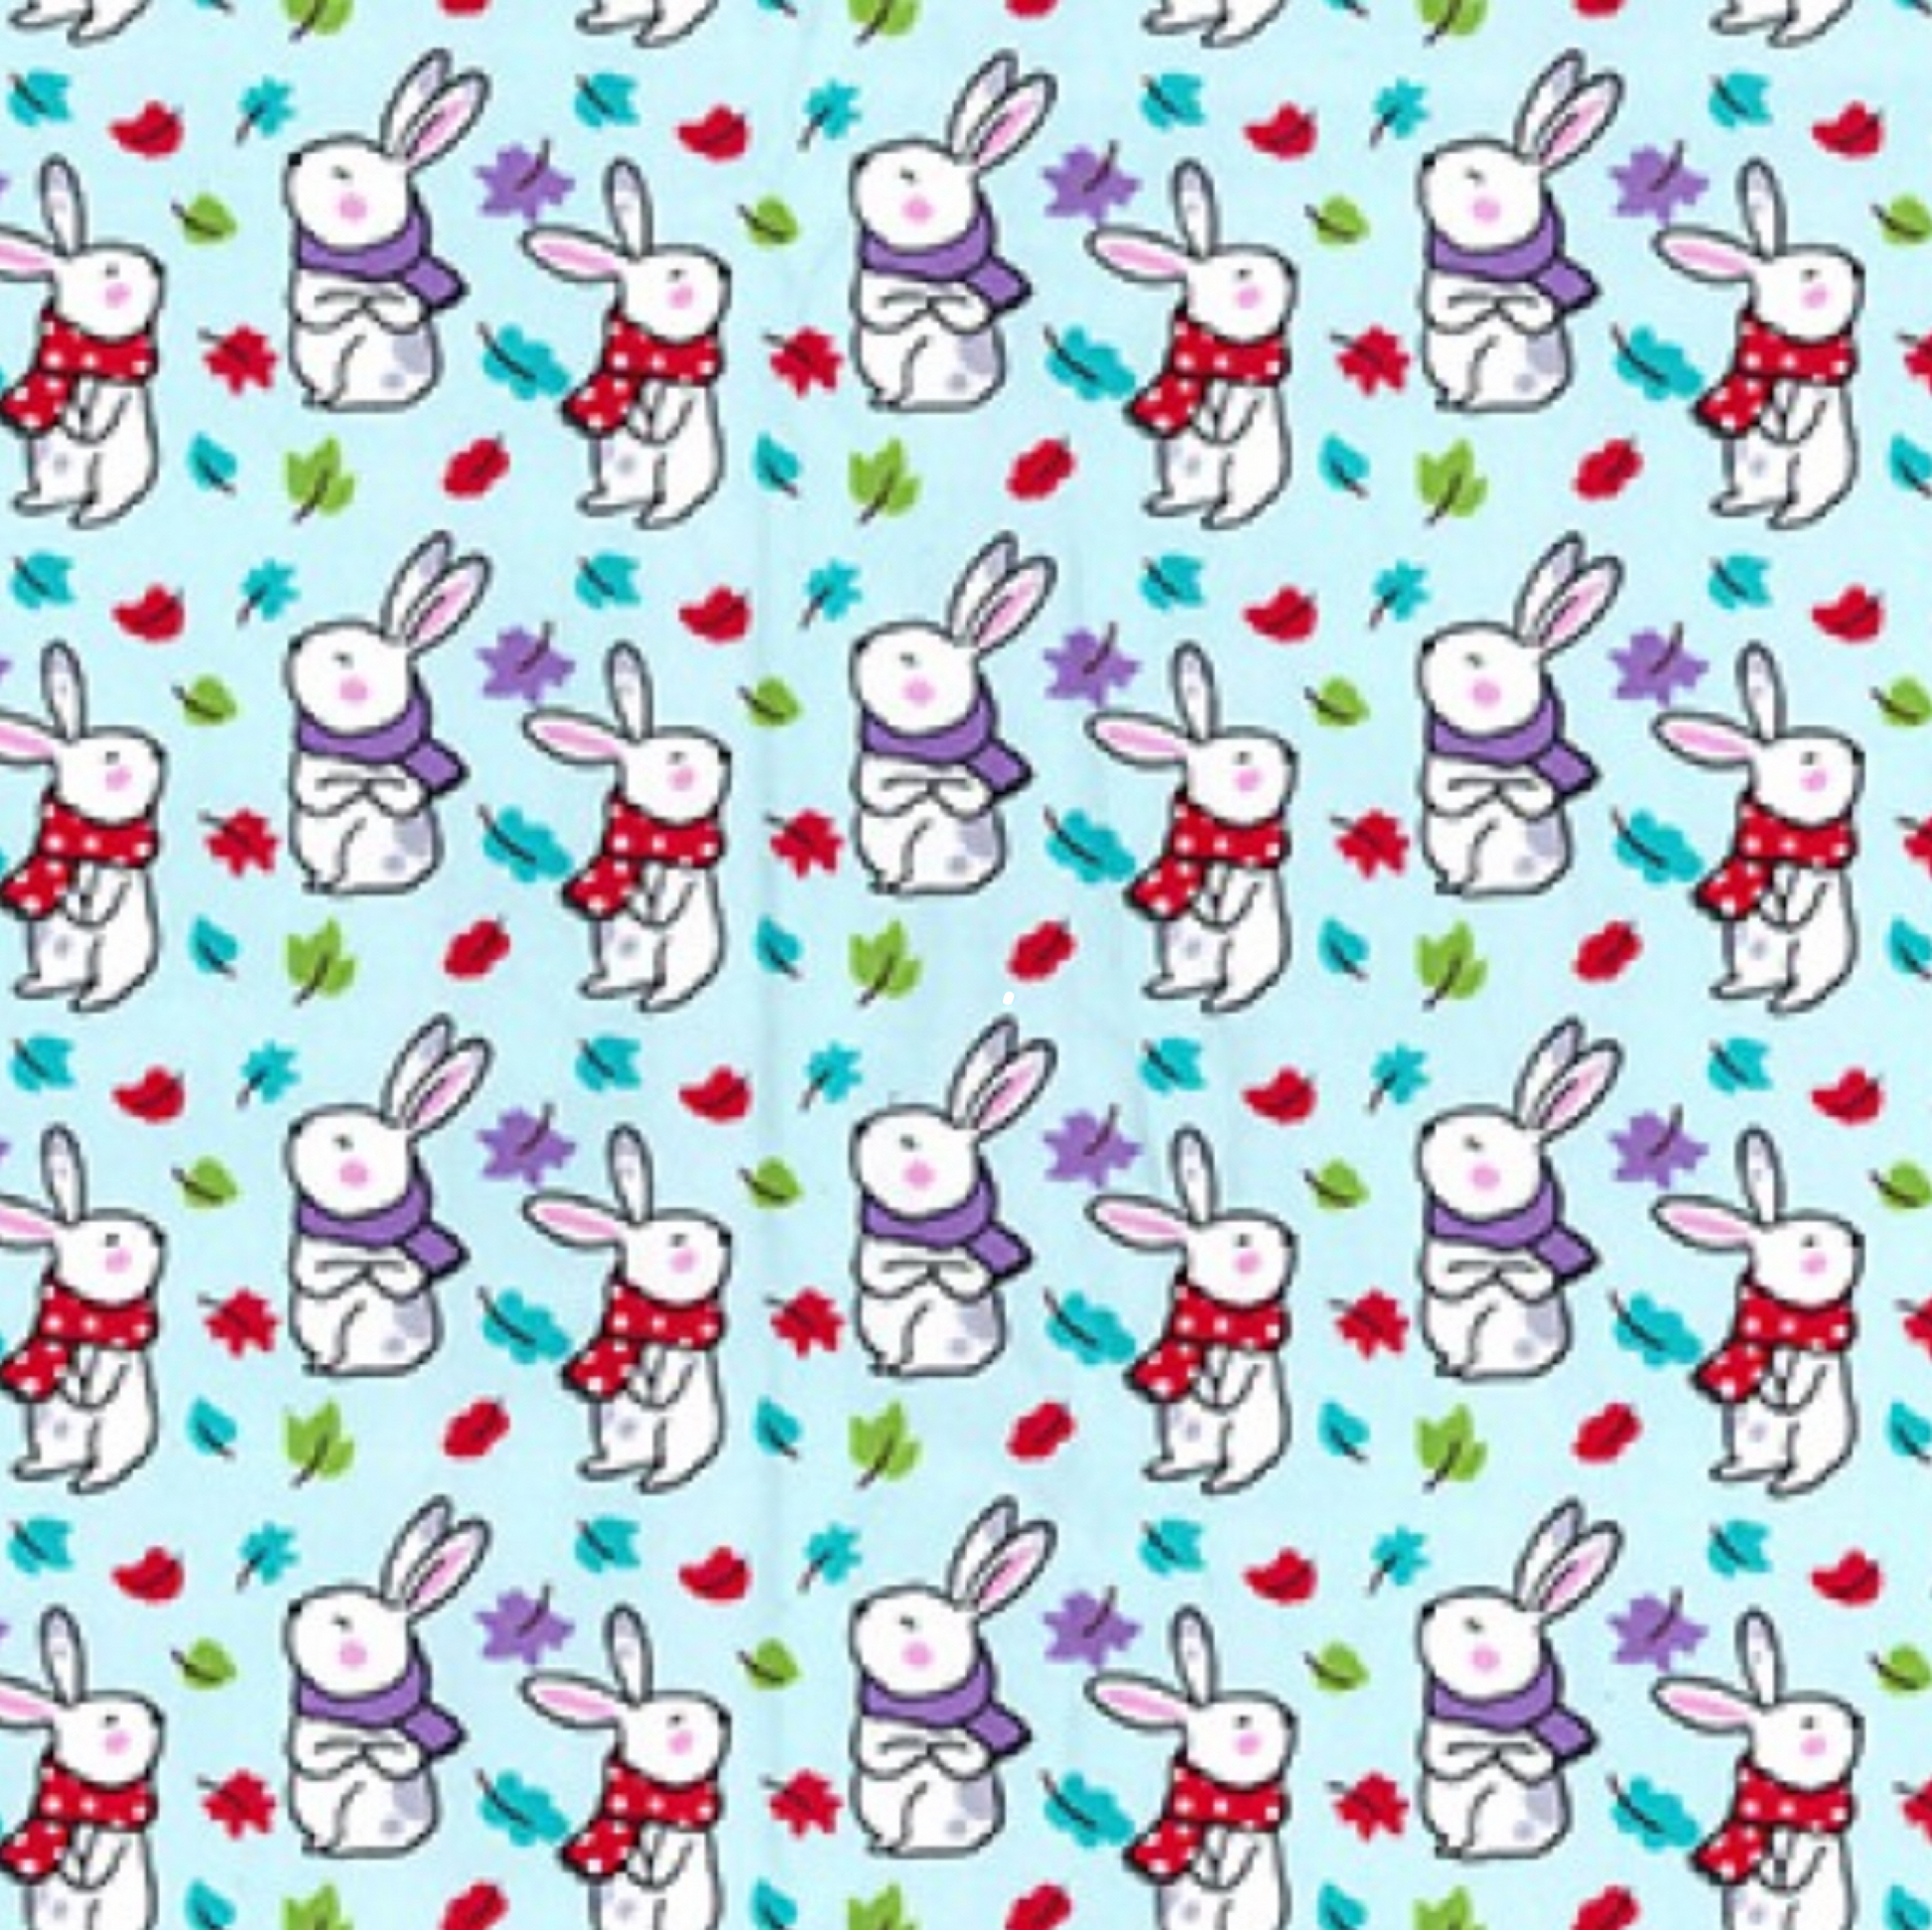 Little Bunnies in Scarves on Mint 100% Cotton Fabric - Rosie's Craft Shop Ltd